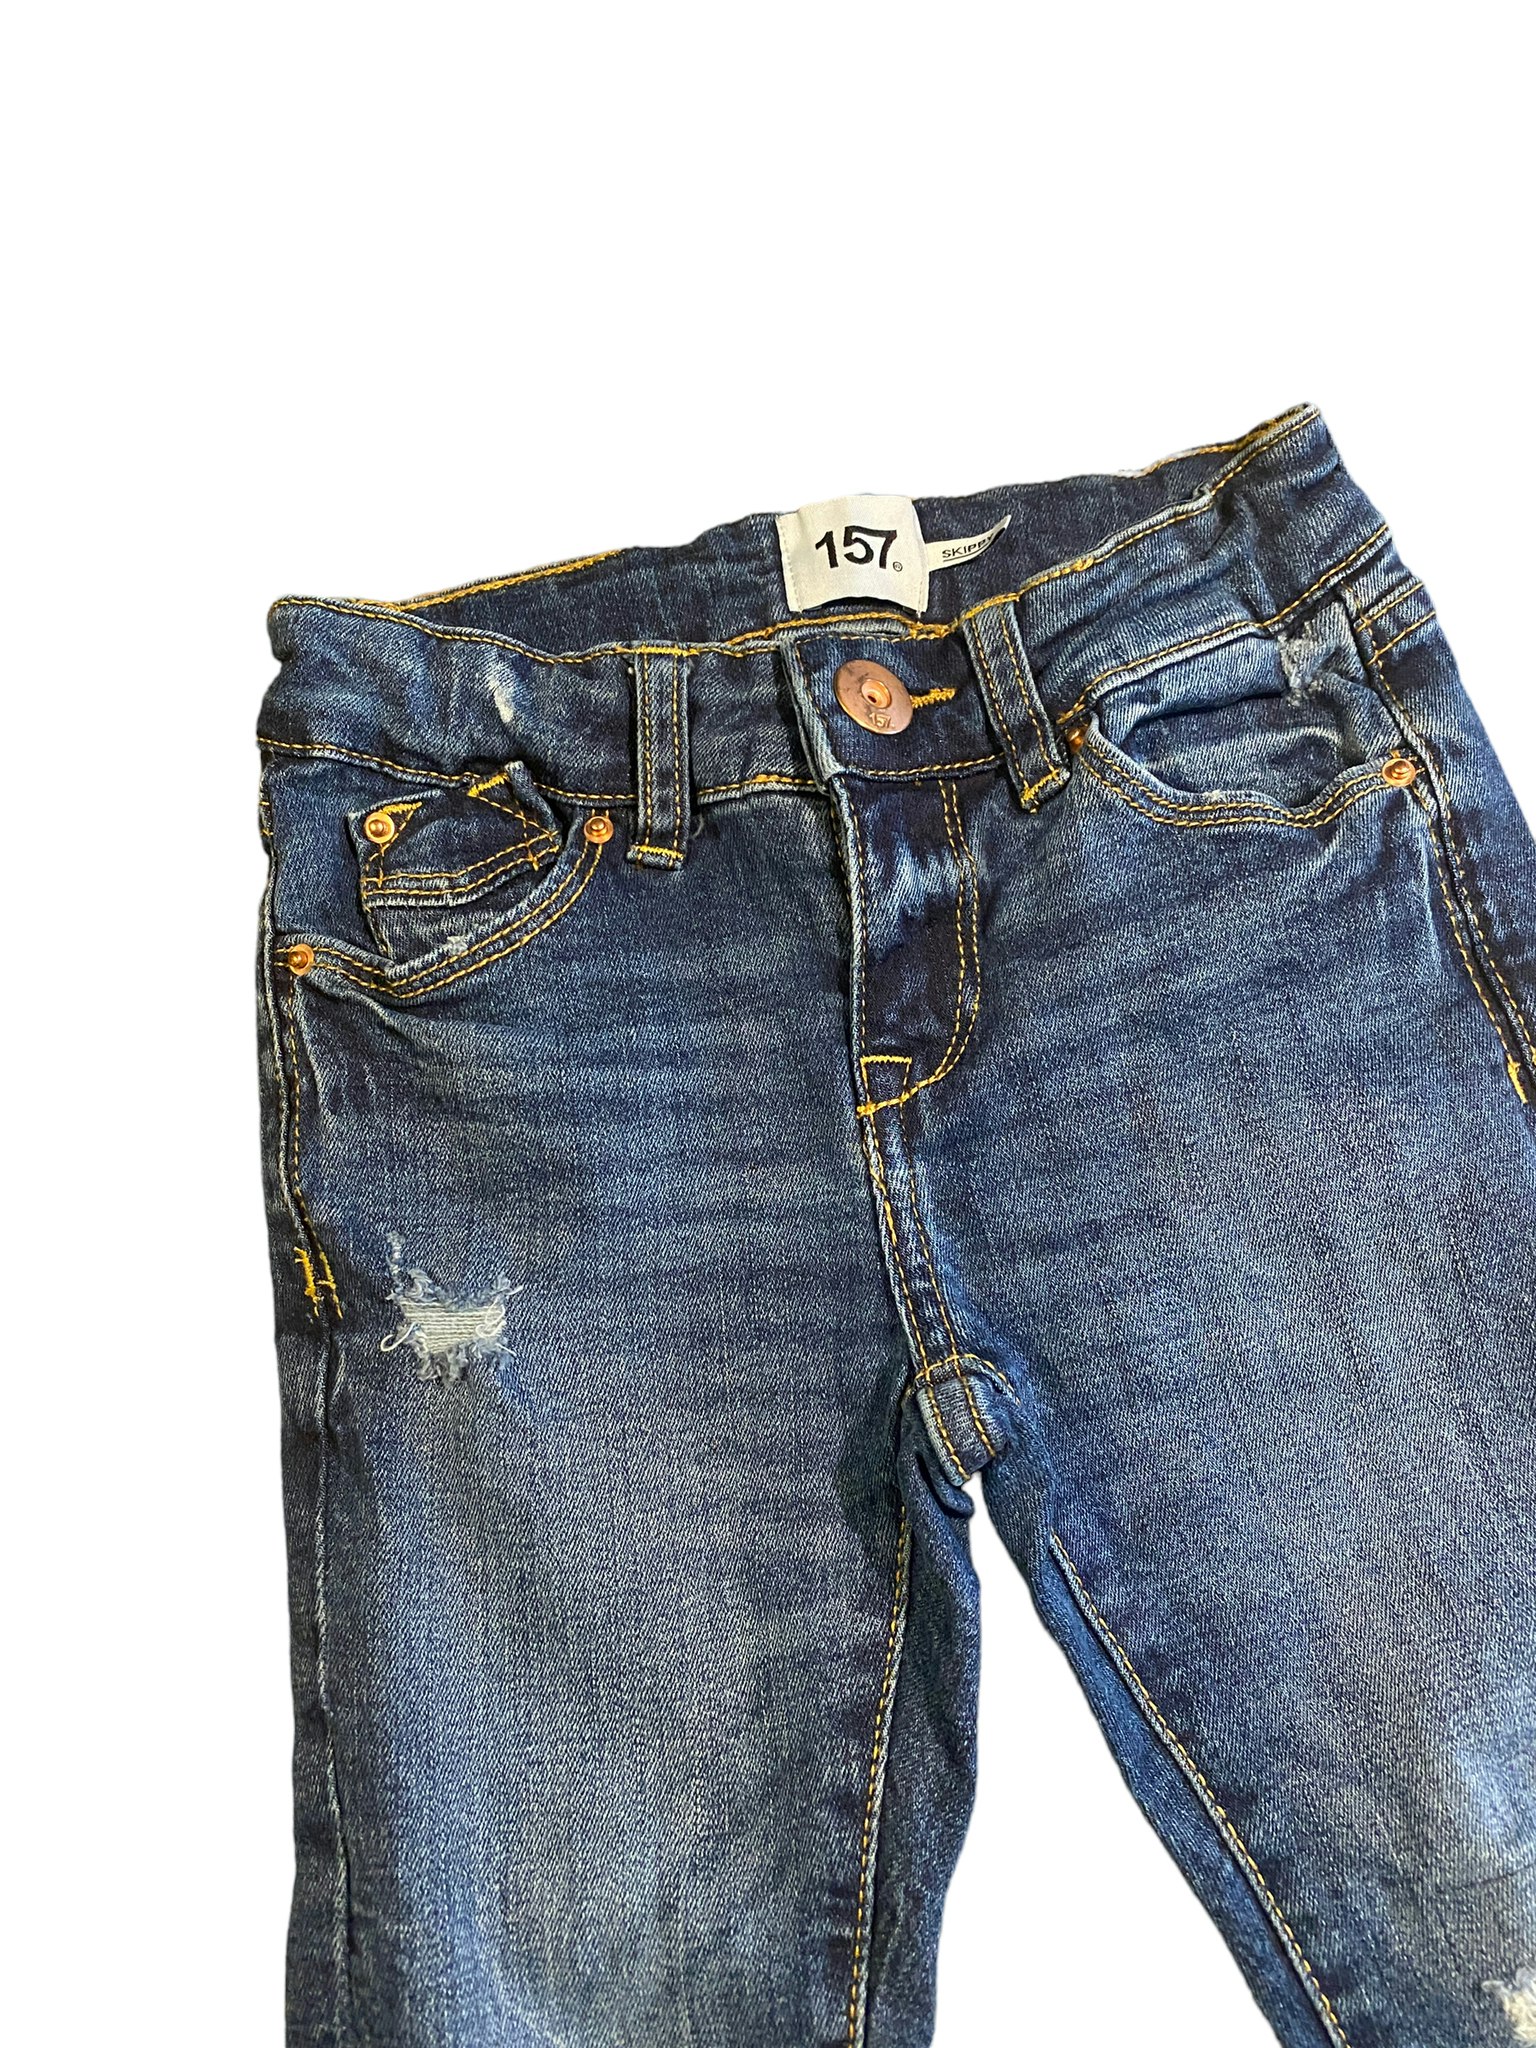 Jeans, Lager 157, stl 110